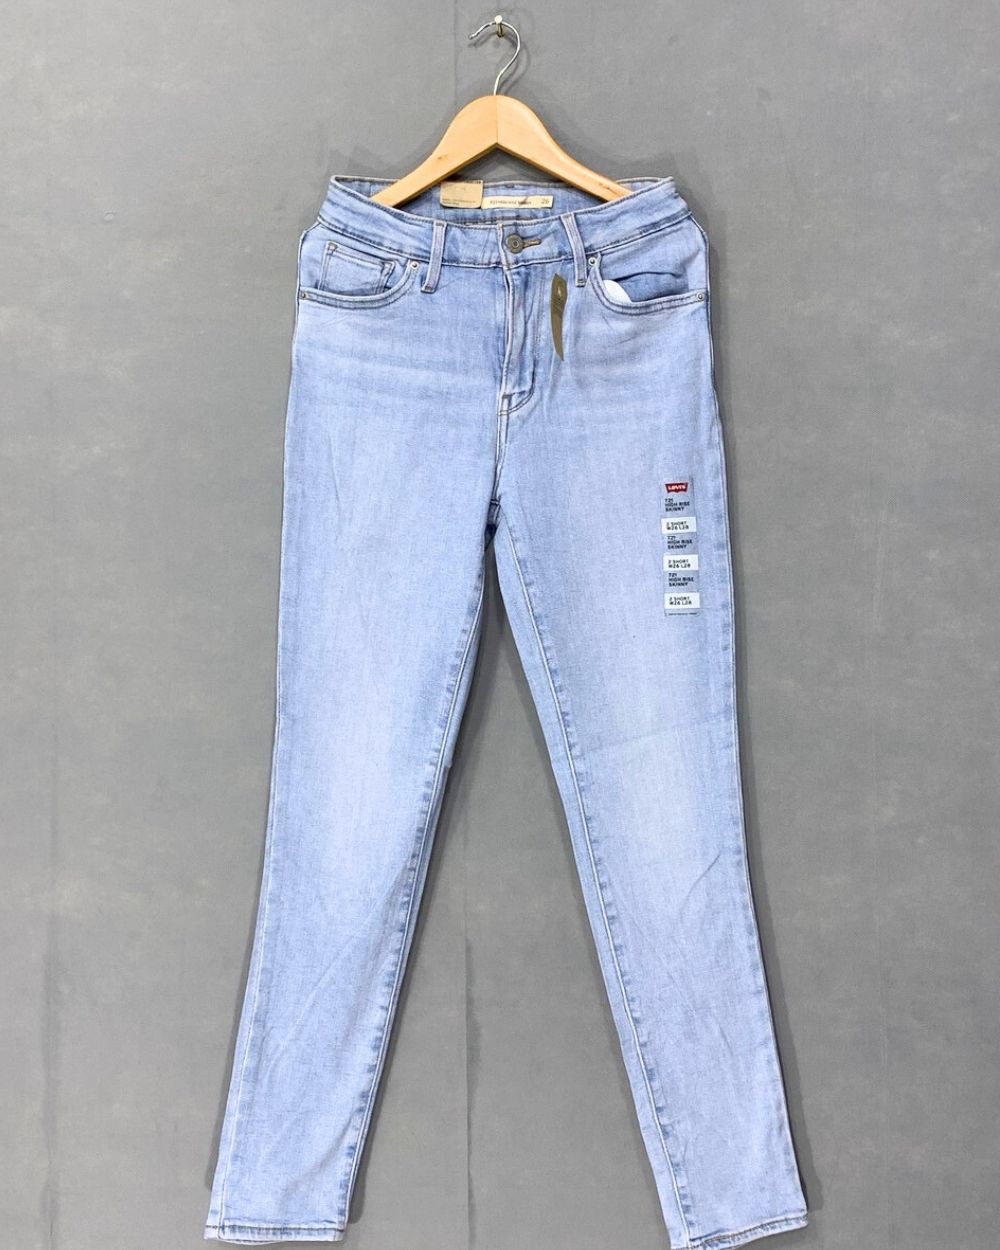 Levi's Branded Original Denim Jeans For Women Pant